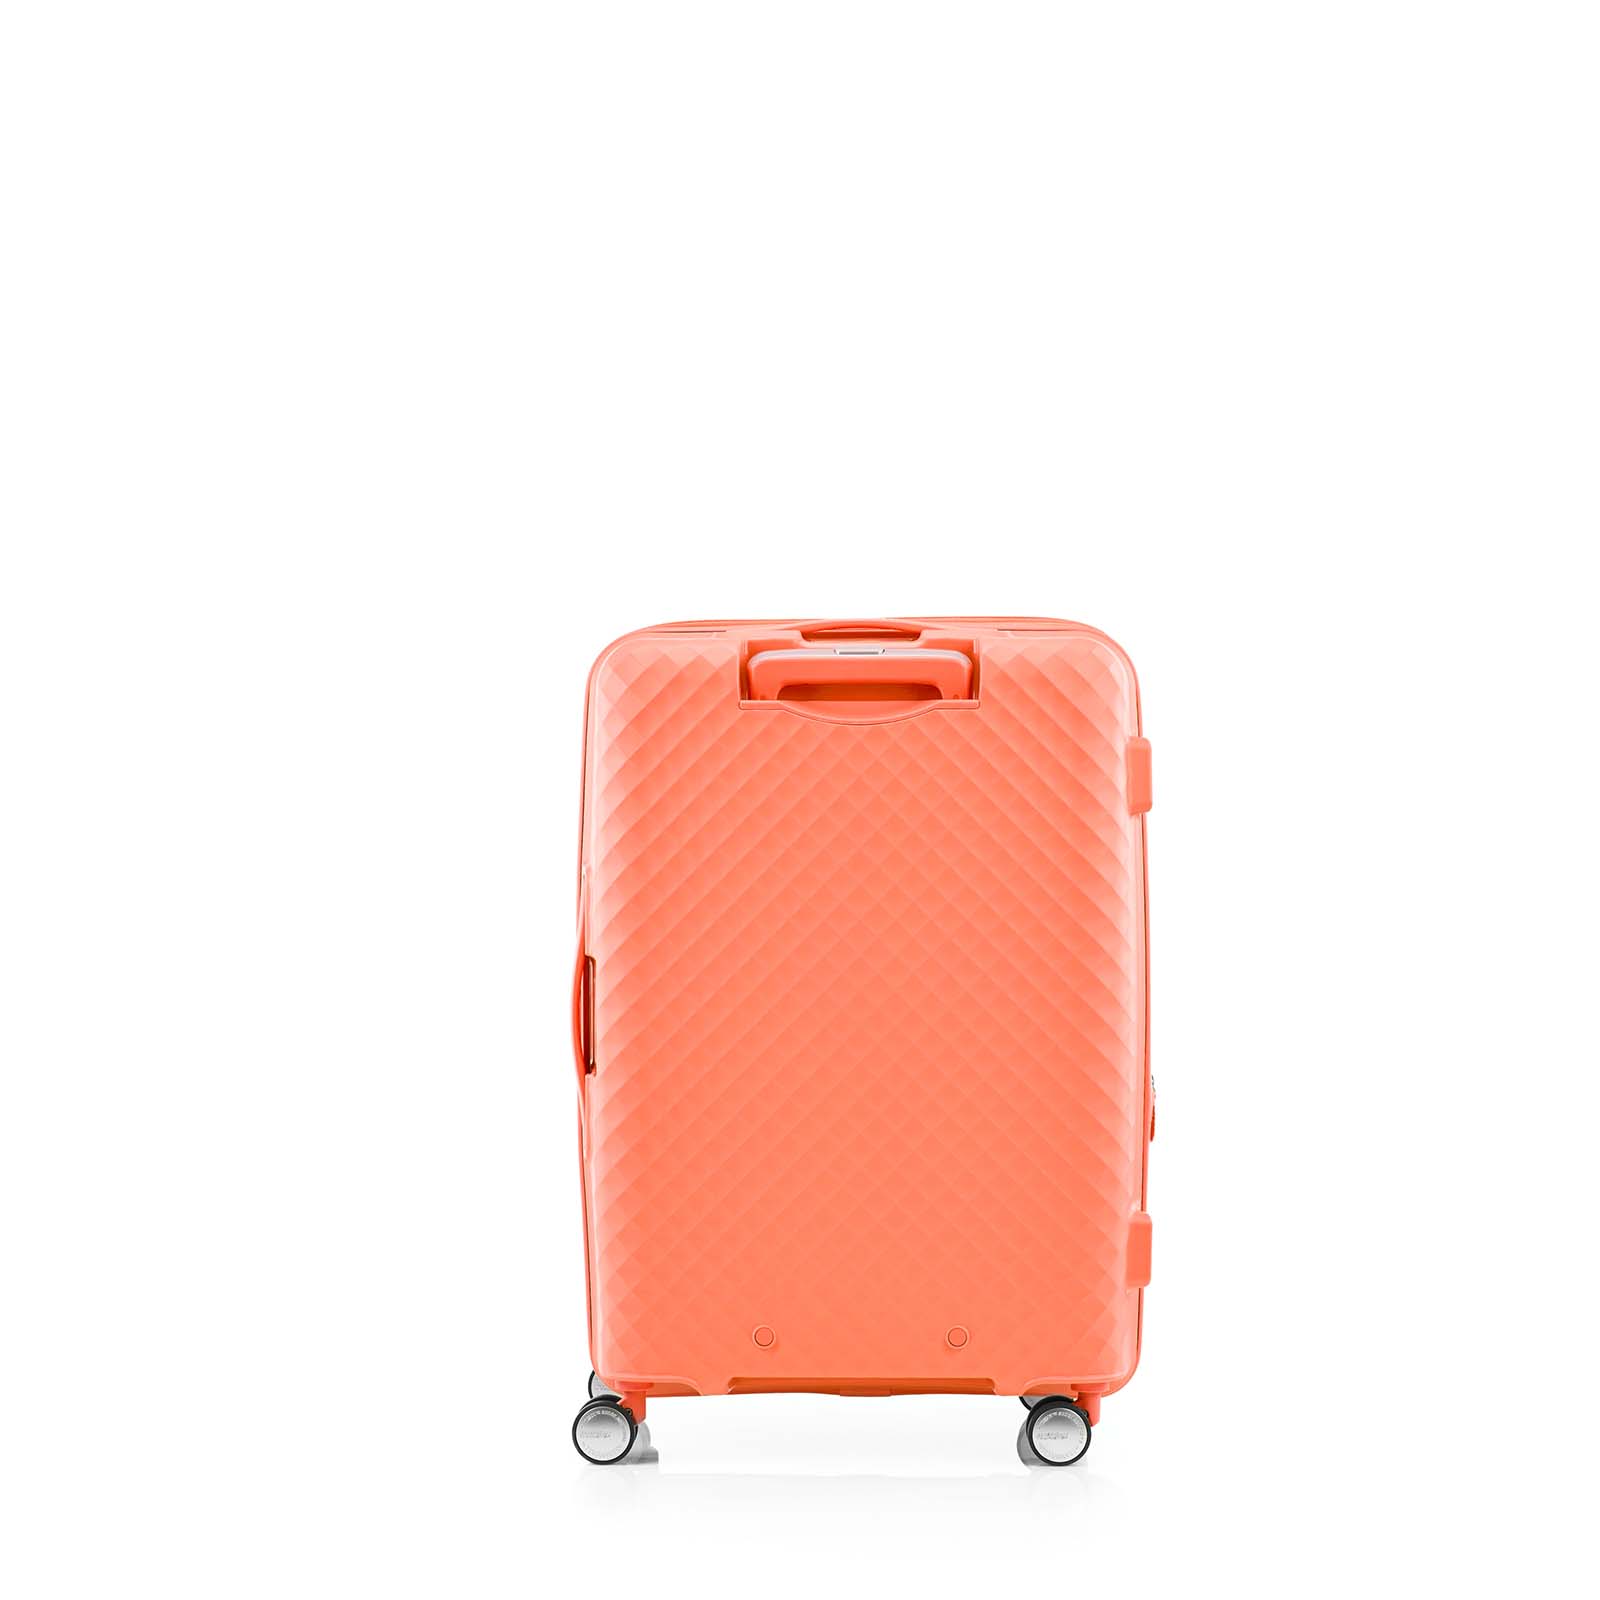 American-Tourister-Squasem-66cm-Suitcase-Bright-Coral-Back